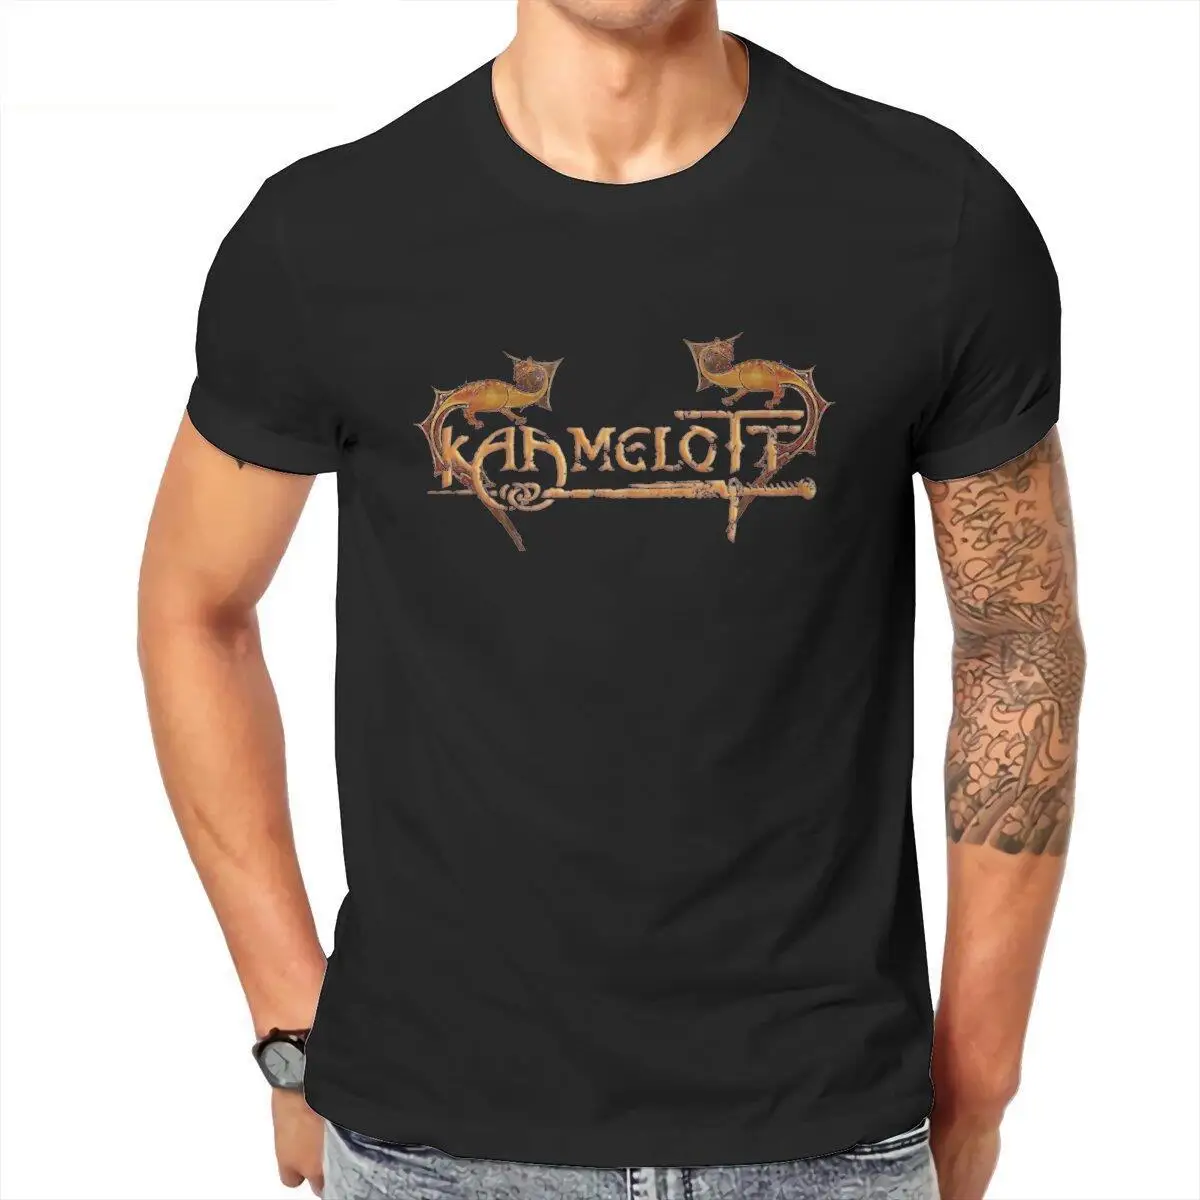 King Arthur Kamelot  T-Shirts Men  Fashion Pure Cotton Tee Shirt Crew Neck Short Sleeve T Shirt Birthday Gift Clothes